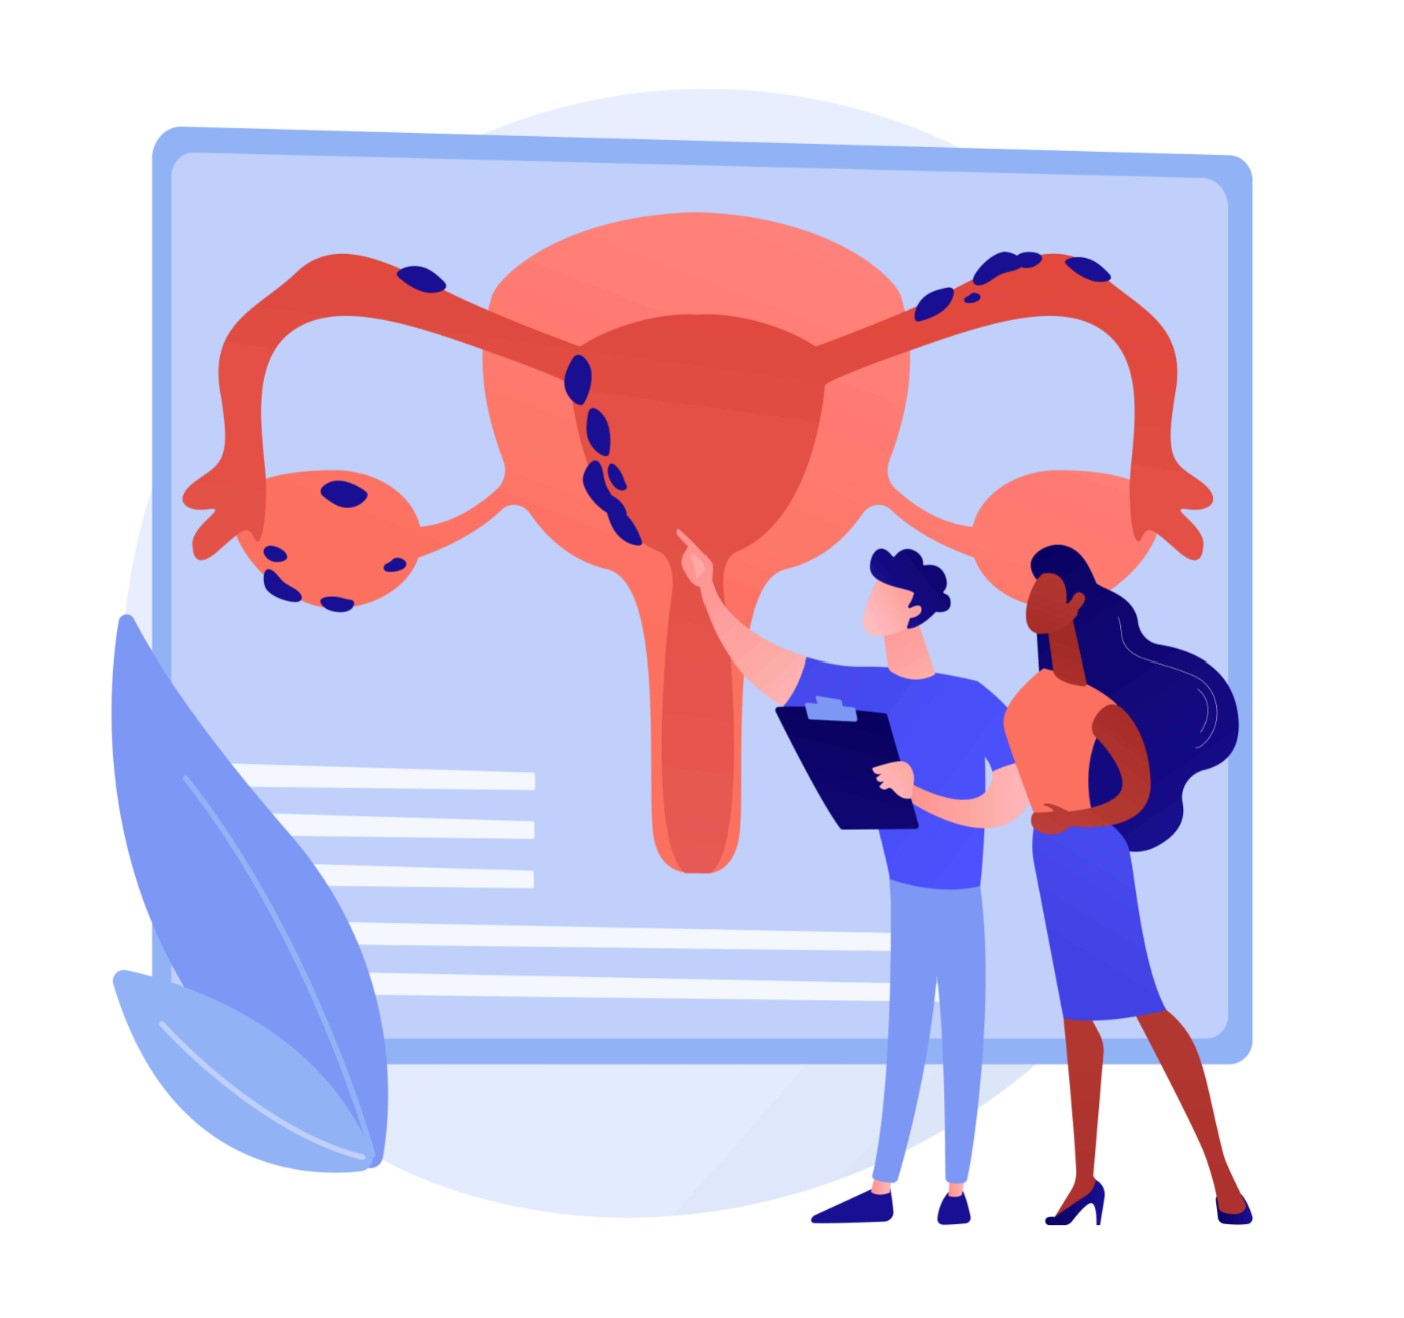 Endometritis and endometriosis, two different causes of infertility -  International